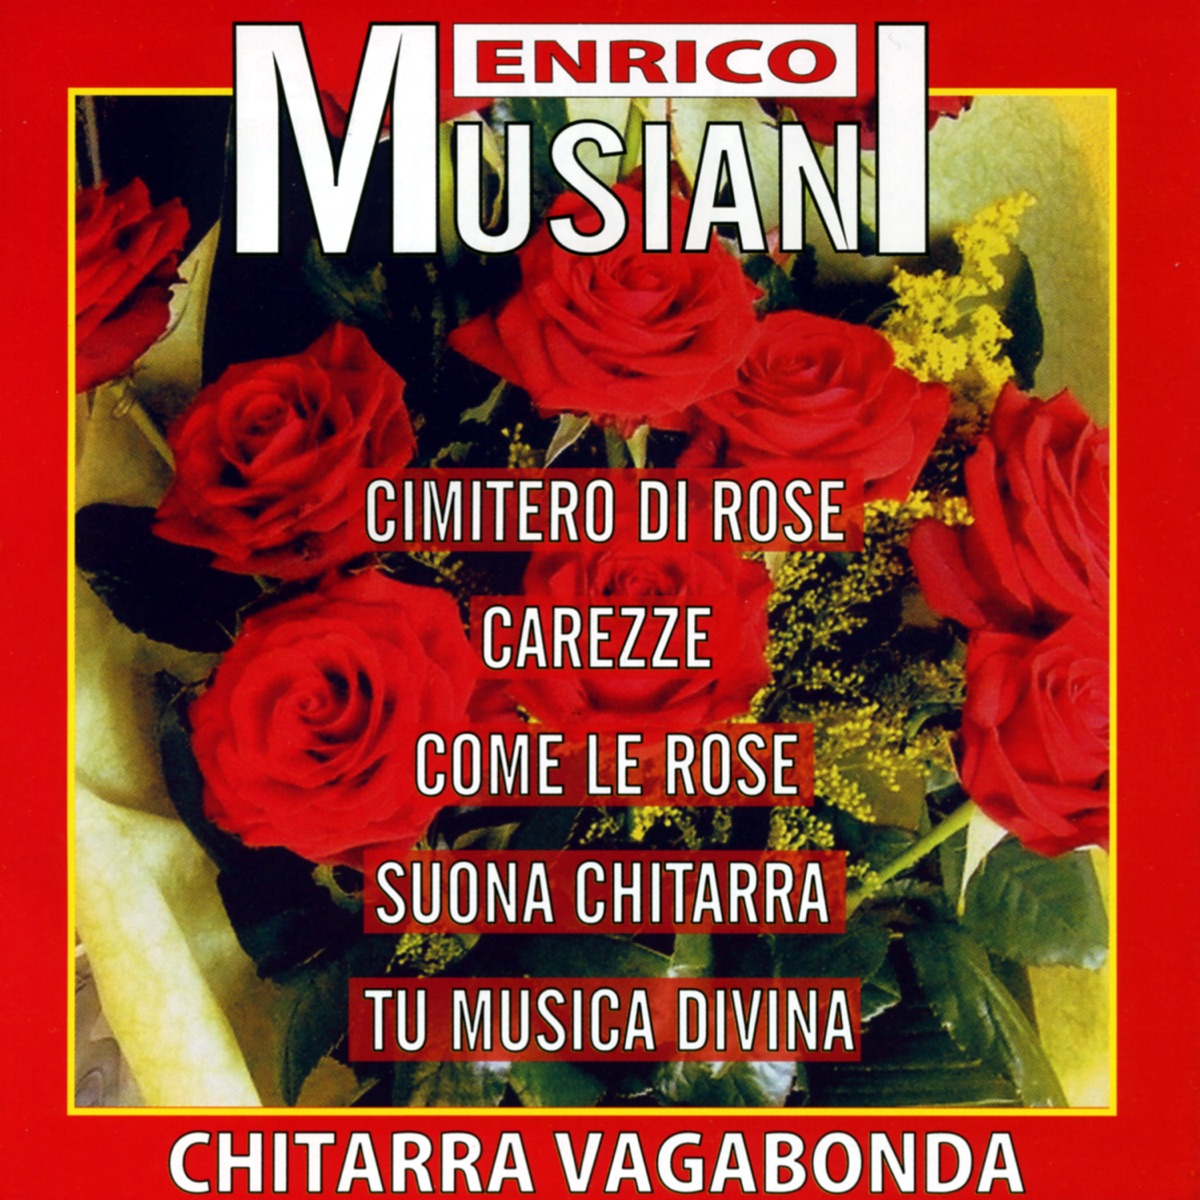 Cimitero di rose by Enrico Musiani on Apple Music